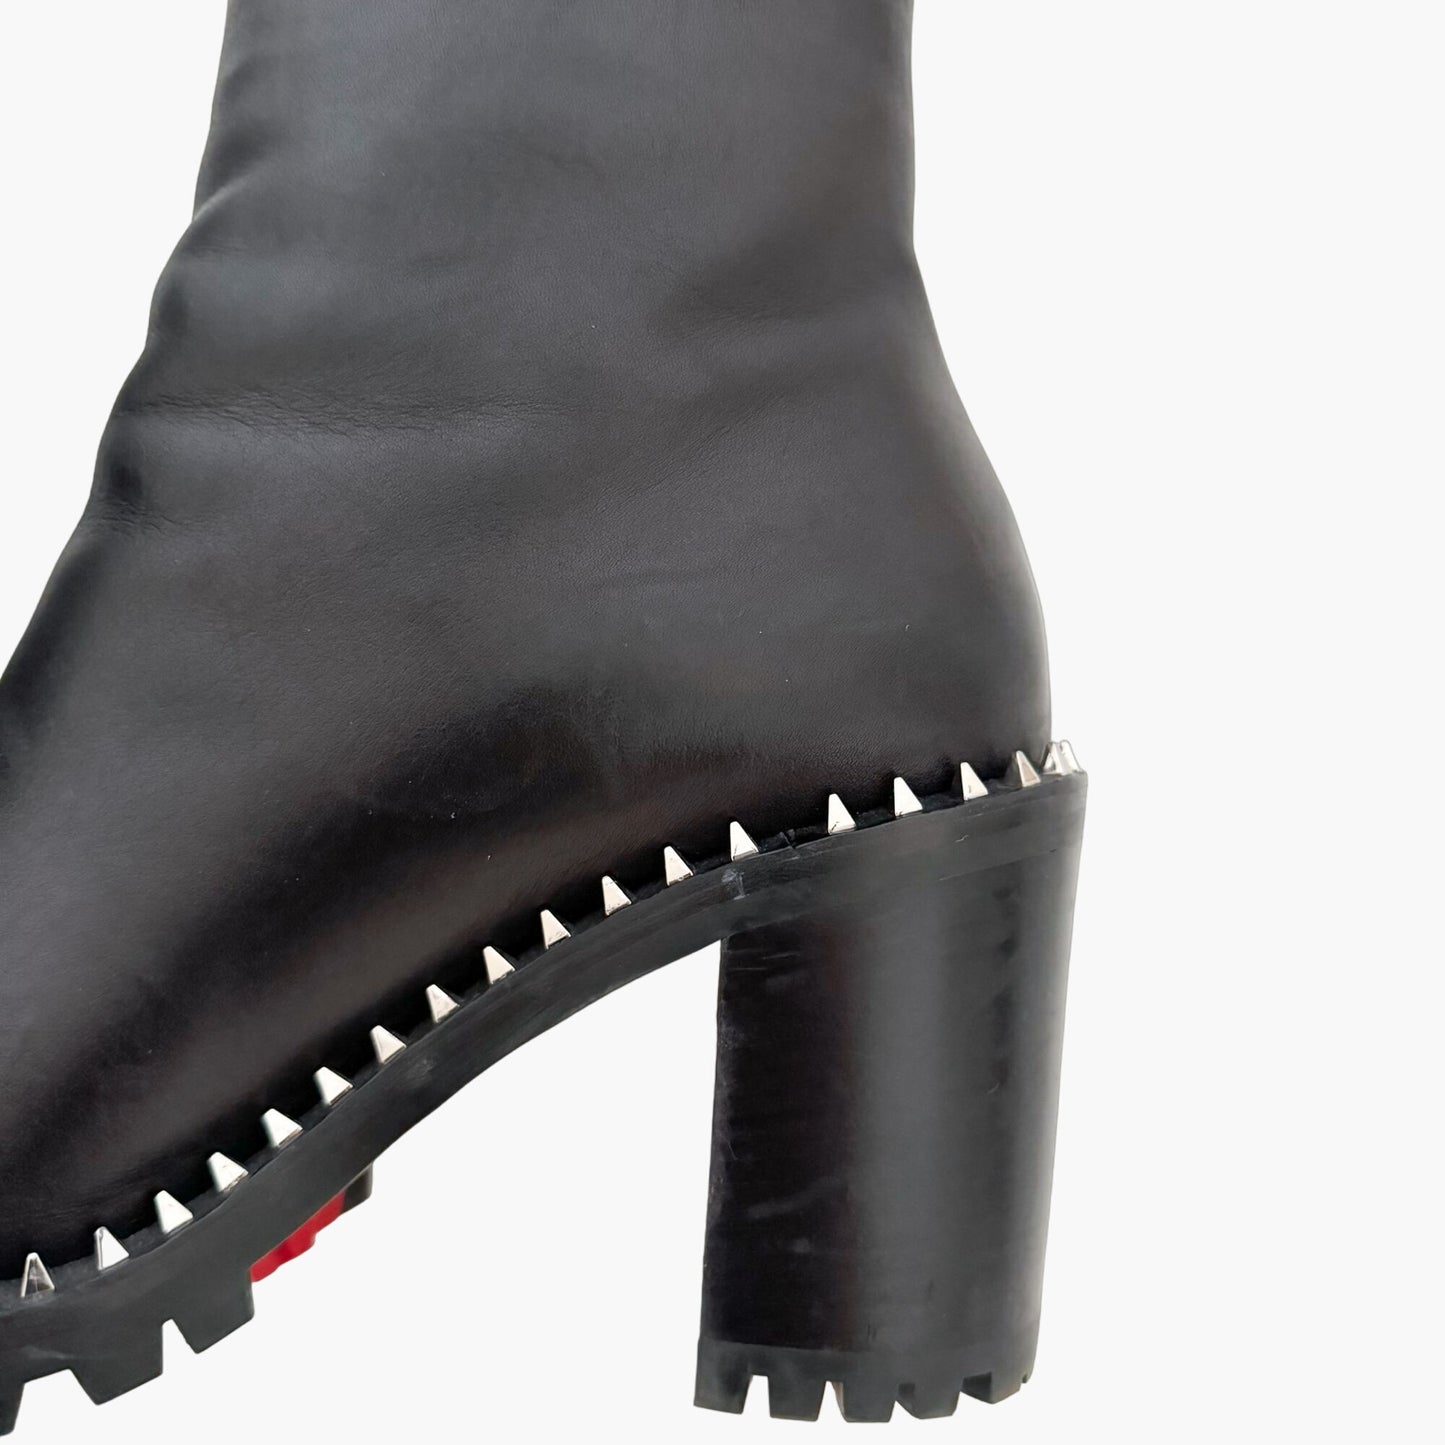 Christian Birgitta Lug 70 Boots in Black Leather Size 39.5